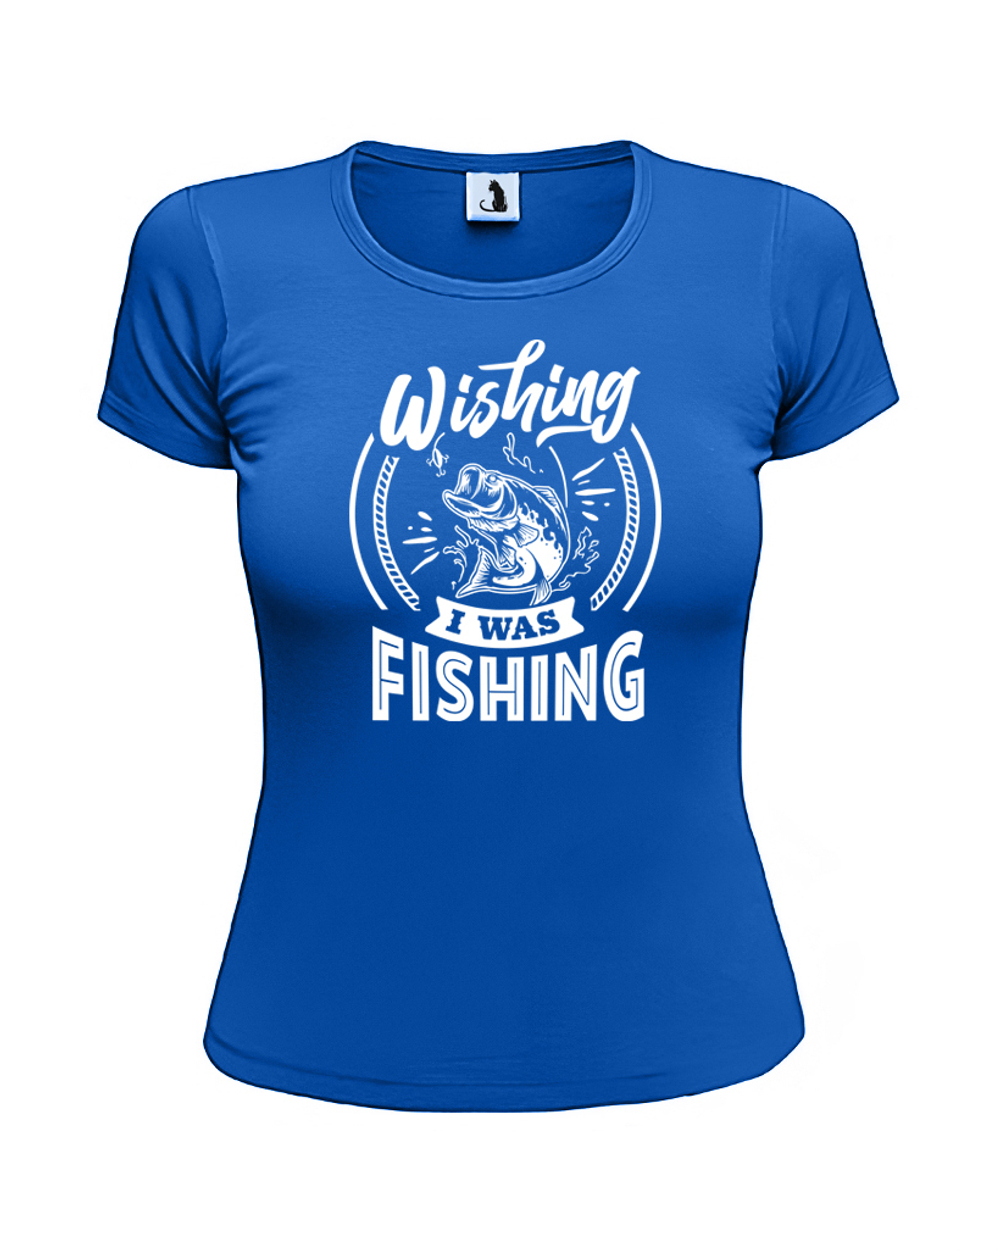 Футболка Wishing I was fishing женская приталенная синяя с белым рисунком